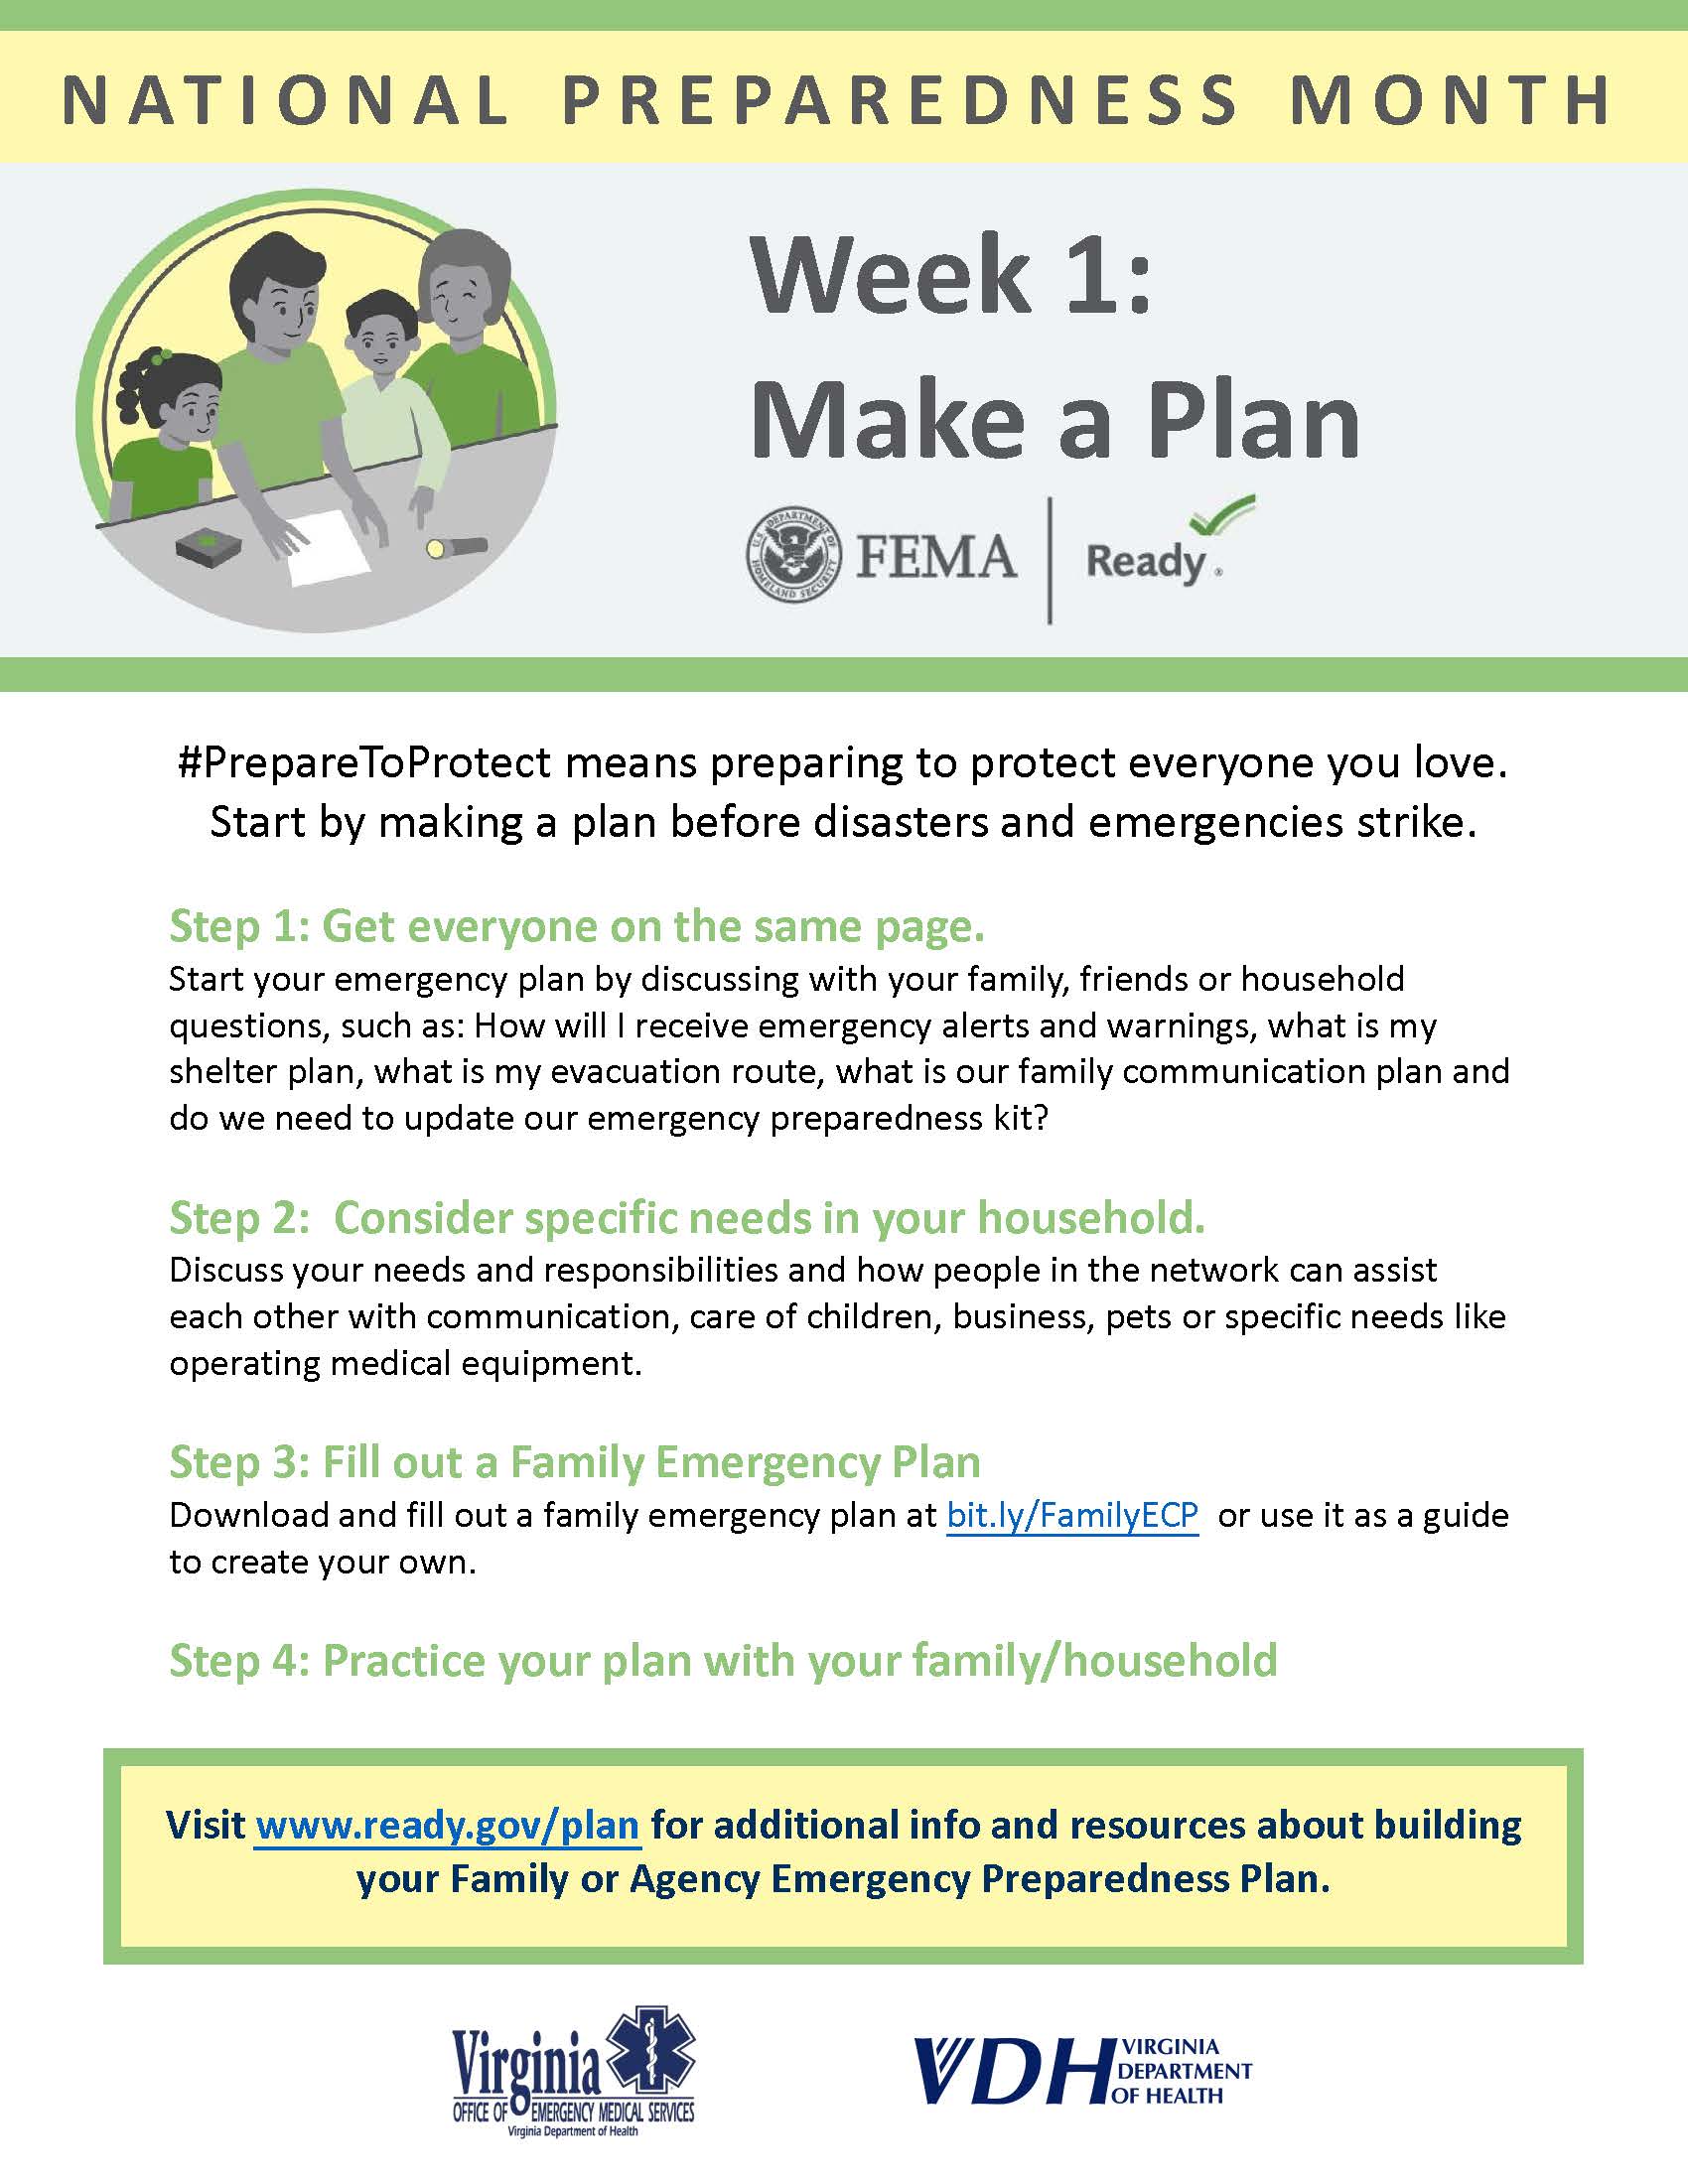 National Preparedness Month: Week 1 - Make a Plan - Emergency Medical  Services